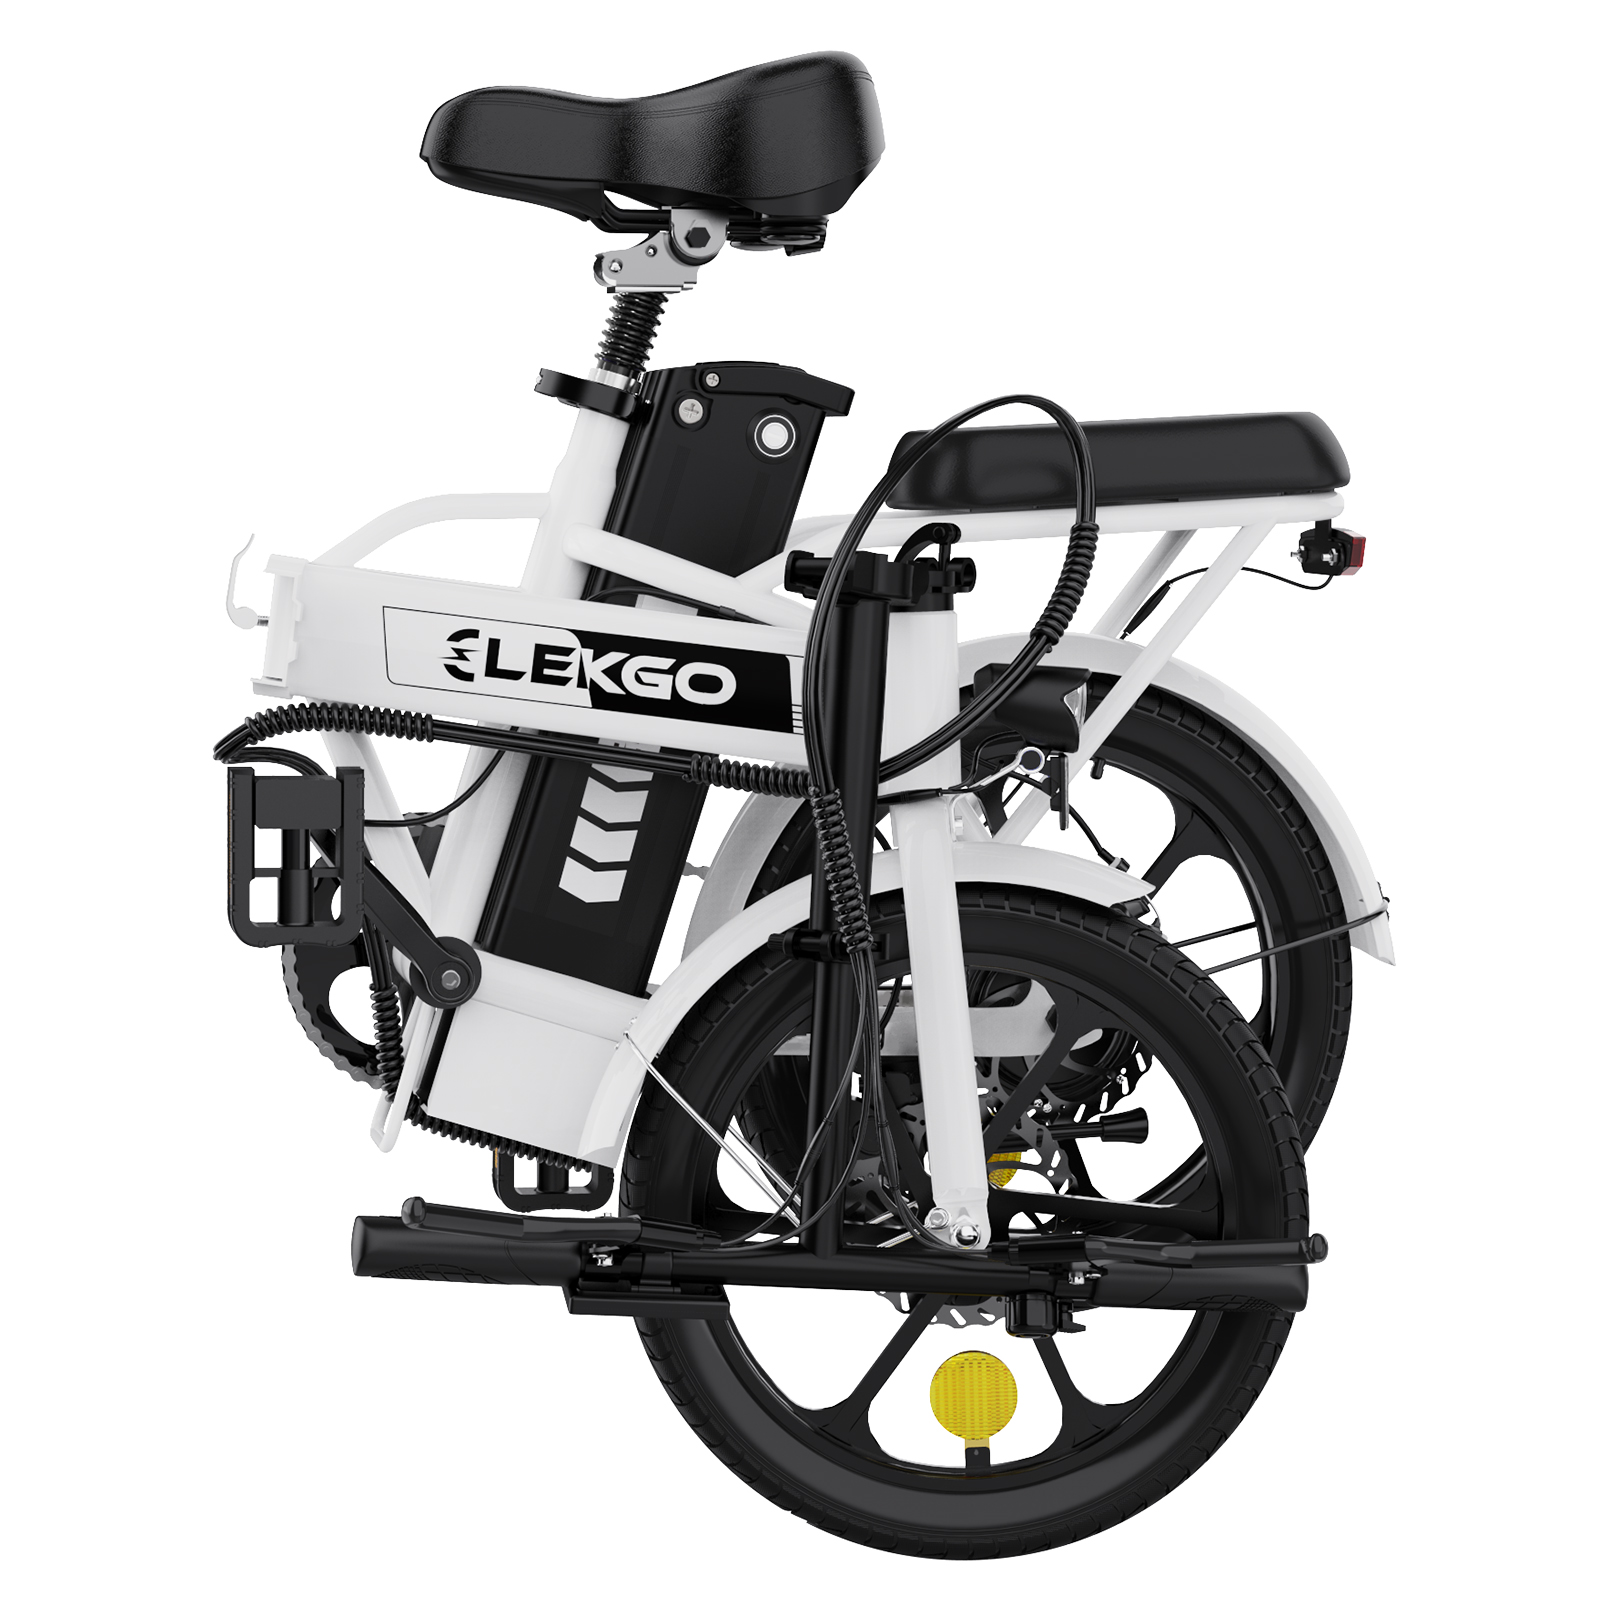 Weiß) Faltbar 250W Kompakt-/Faltrad (Laufradgröße: EG05 ELEKGO 16 302.4Wh, Damen-Rad, Zoll, 16\